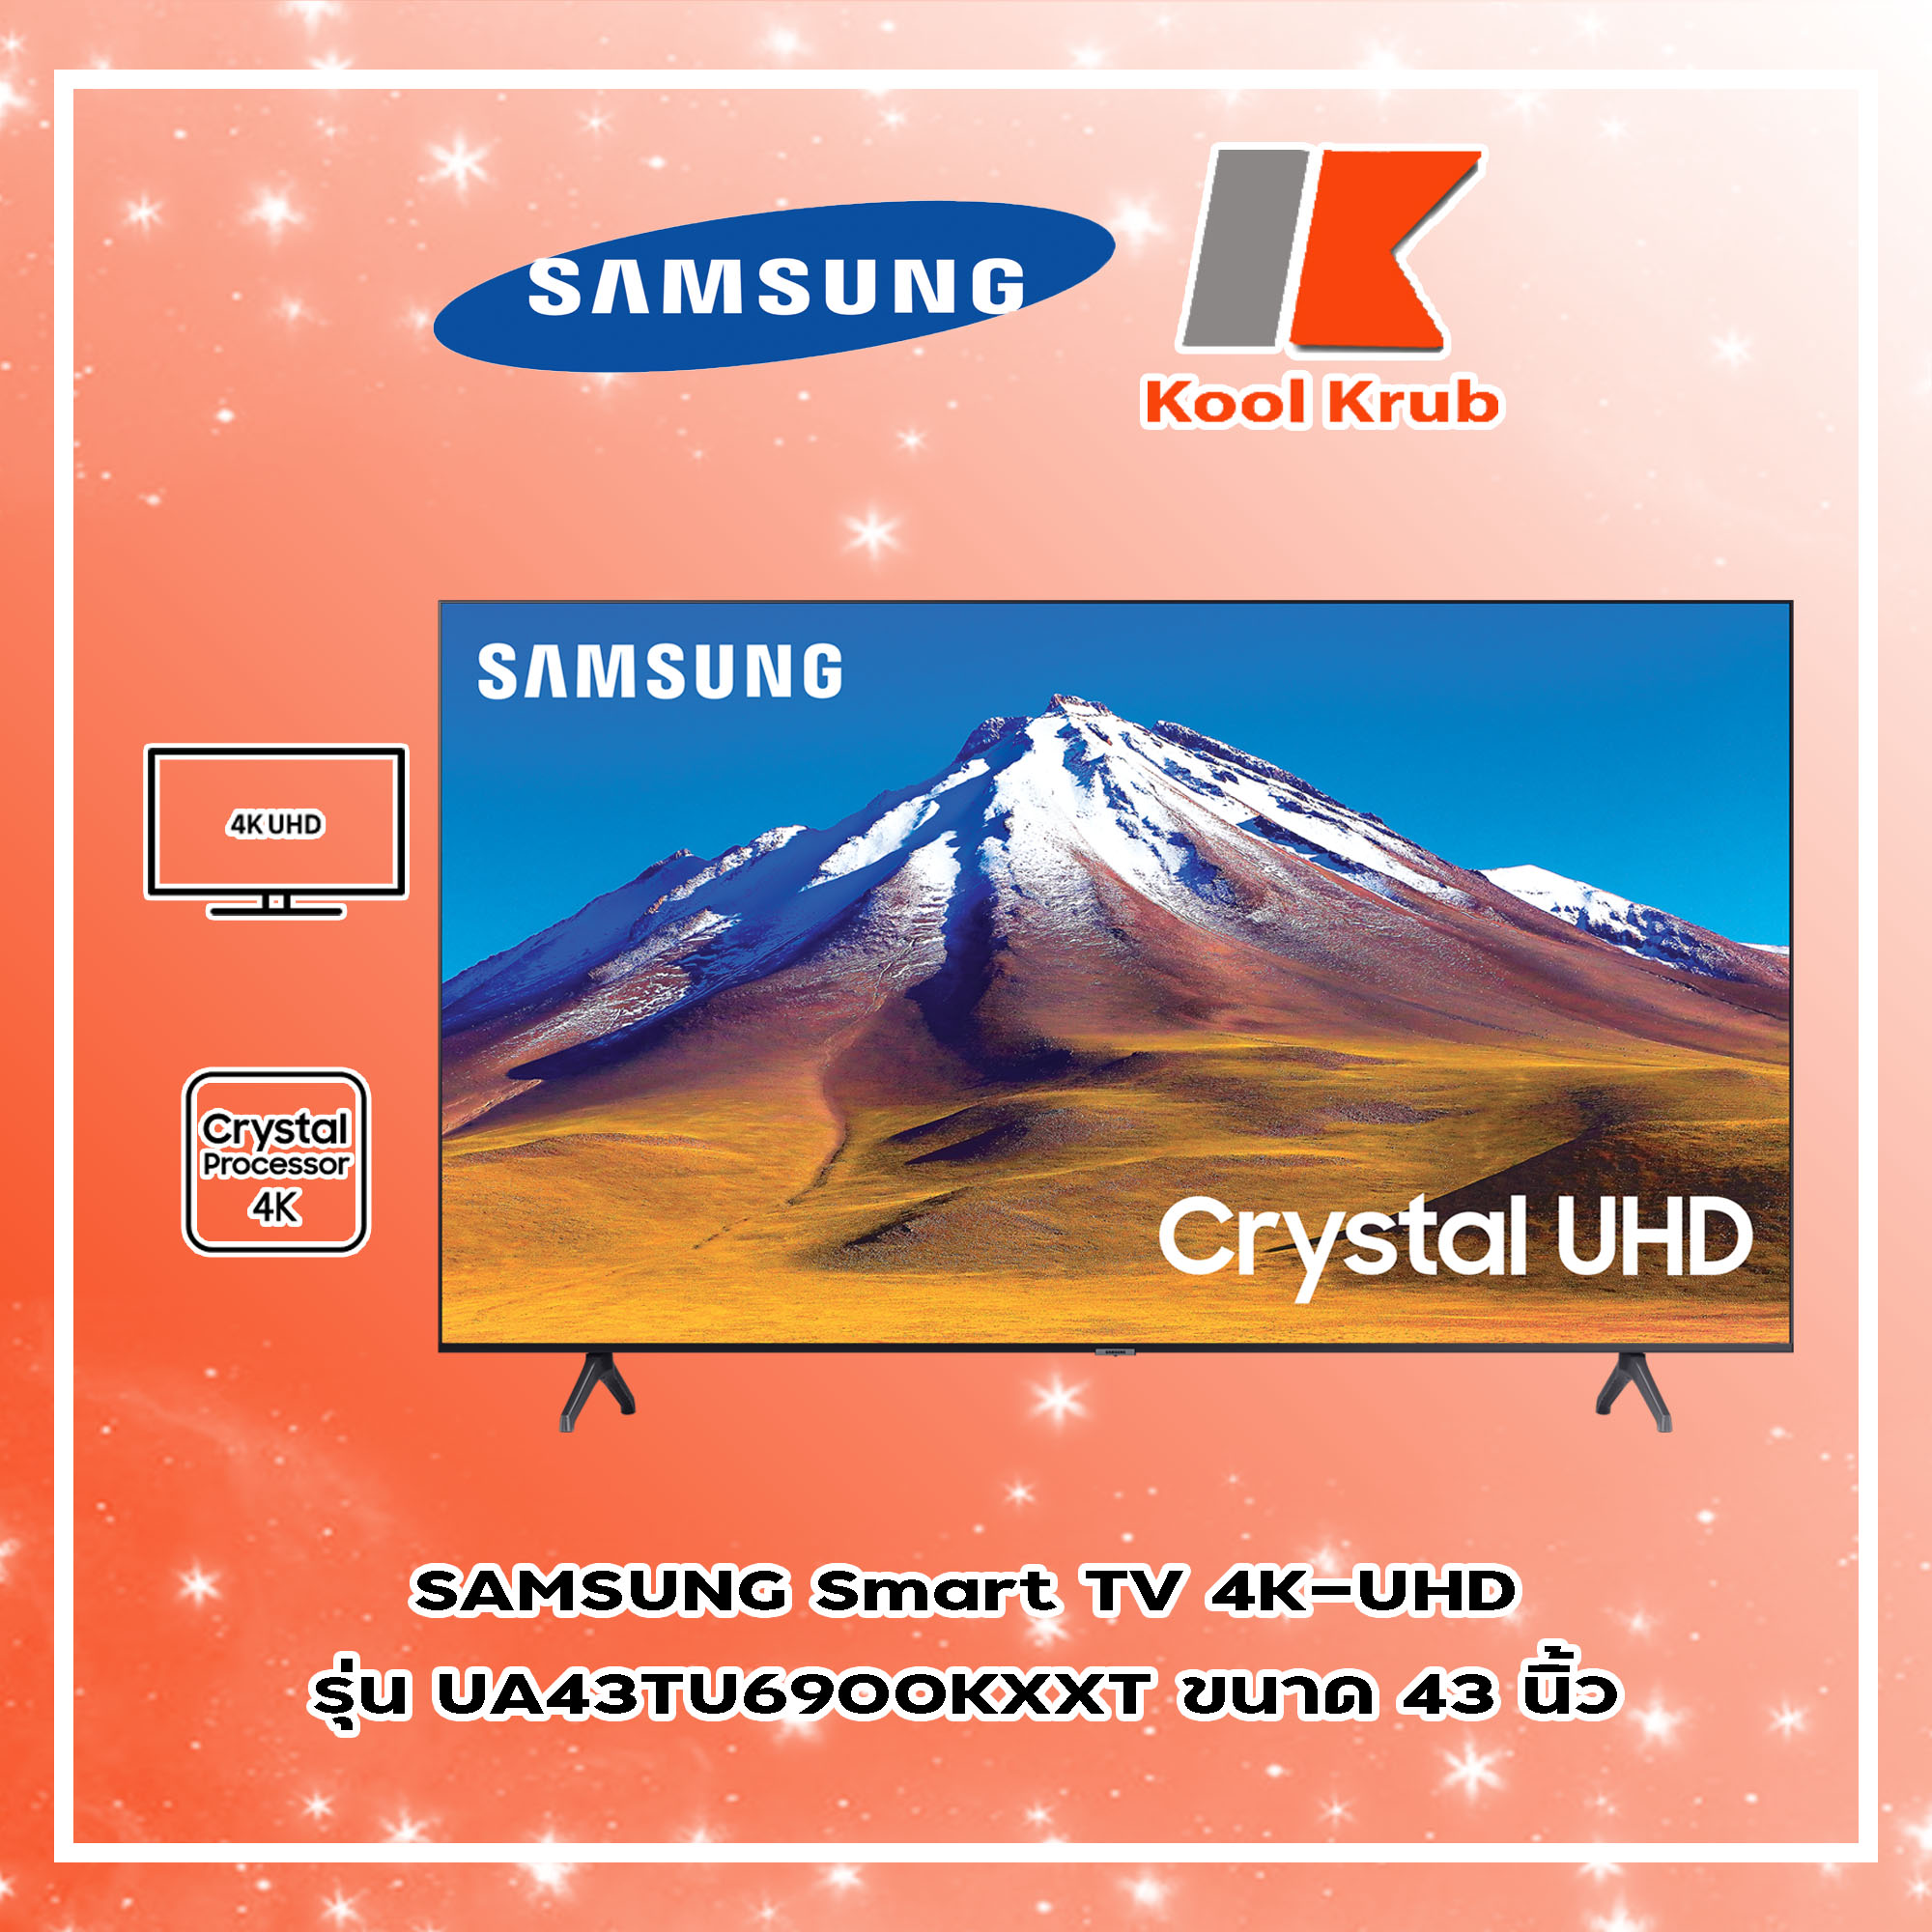 SAMSUNG Smart TV 4K-UHD รุ่น UA43TU6900KXXT ขนาด 43 นิ้ว UA43TU6900